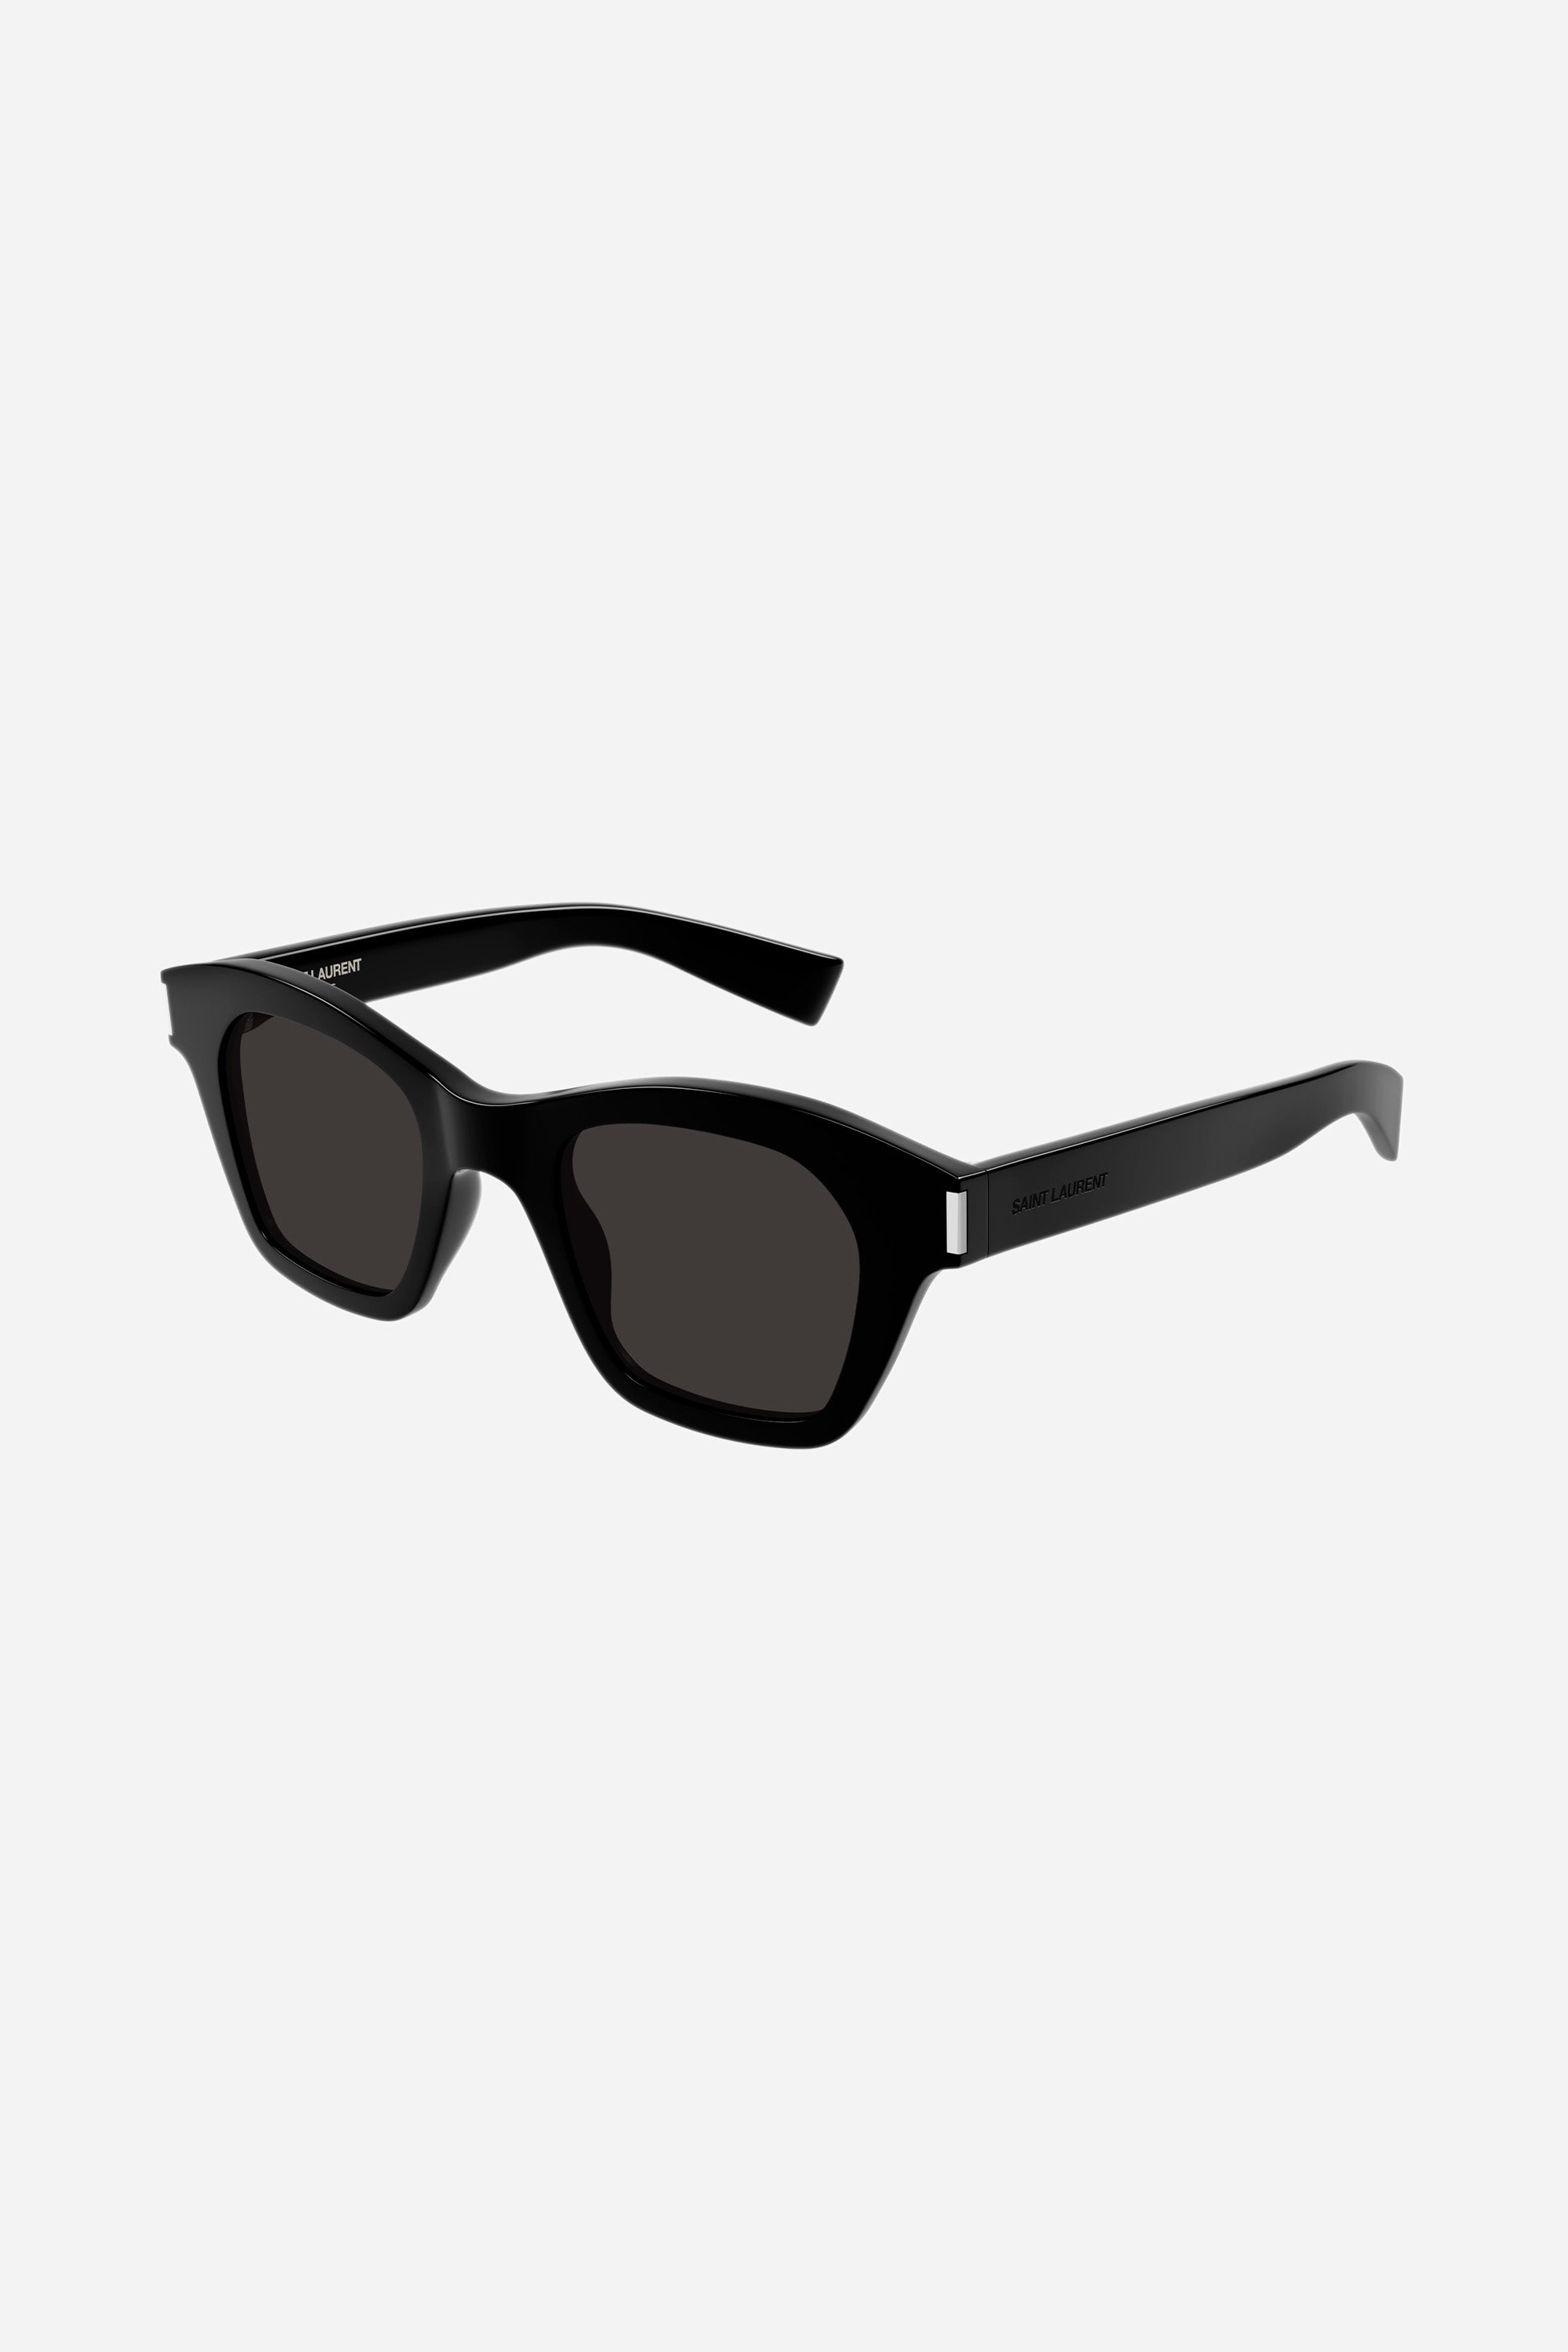 Saint Laurent bold cat-eye black sunglasses - Eyewear Club